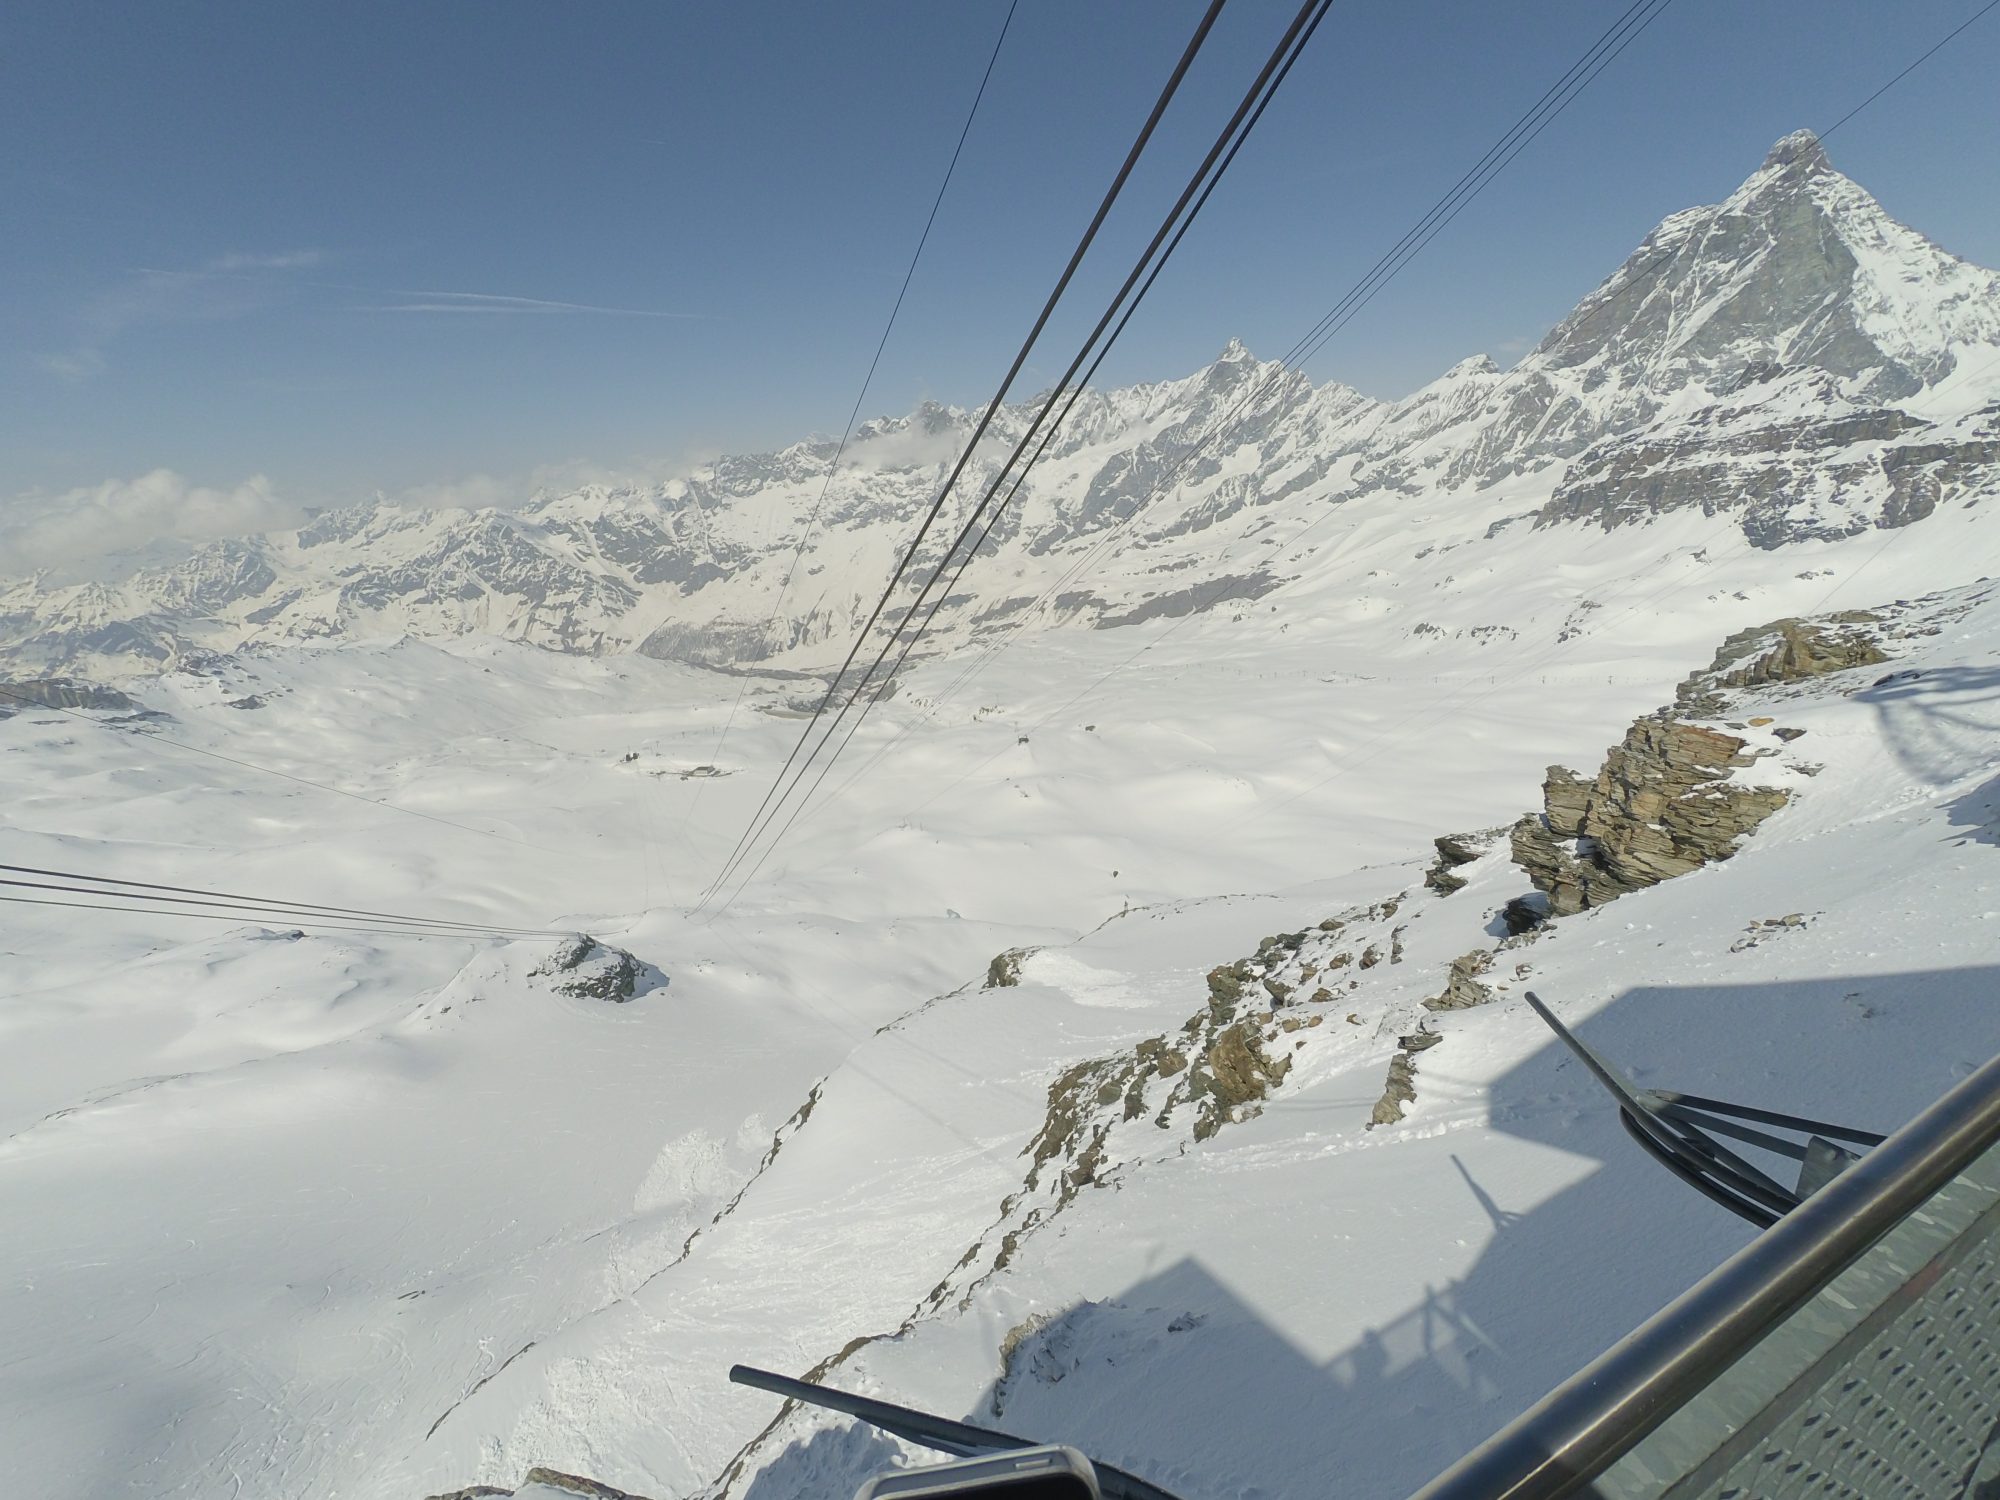 Photo: Cervino Ski Paradise. Spot on Cervino Ski Paradise for the 2018-19 ski season.